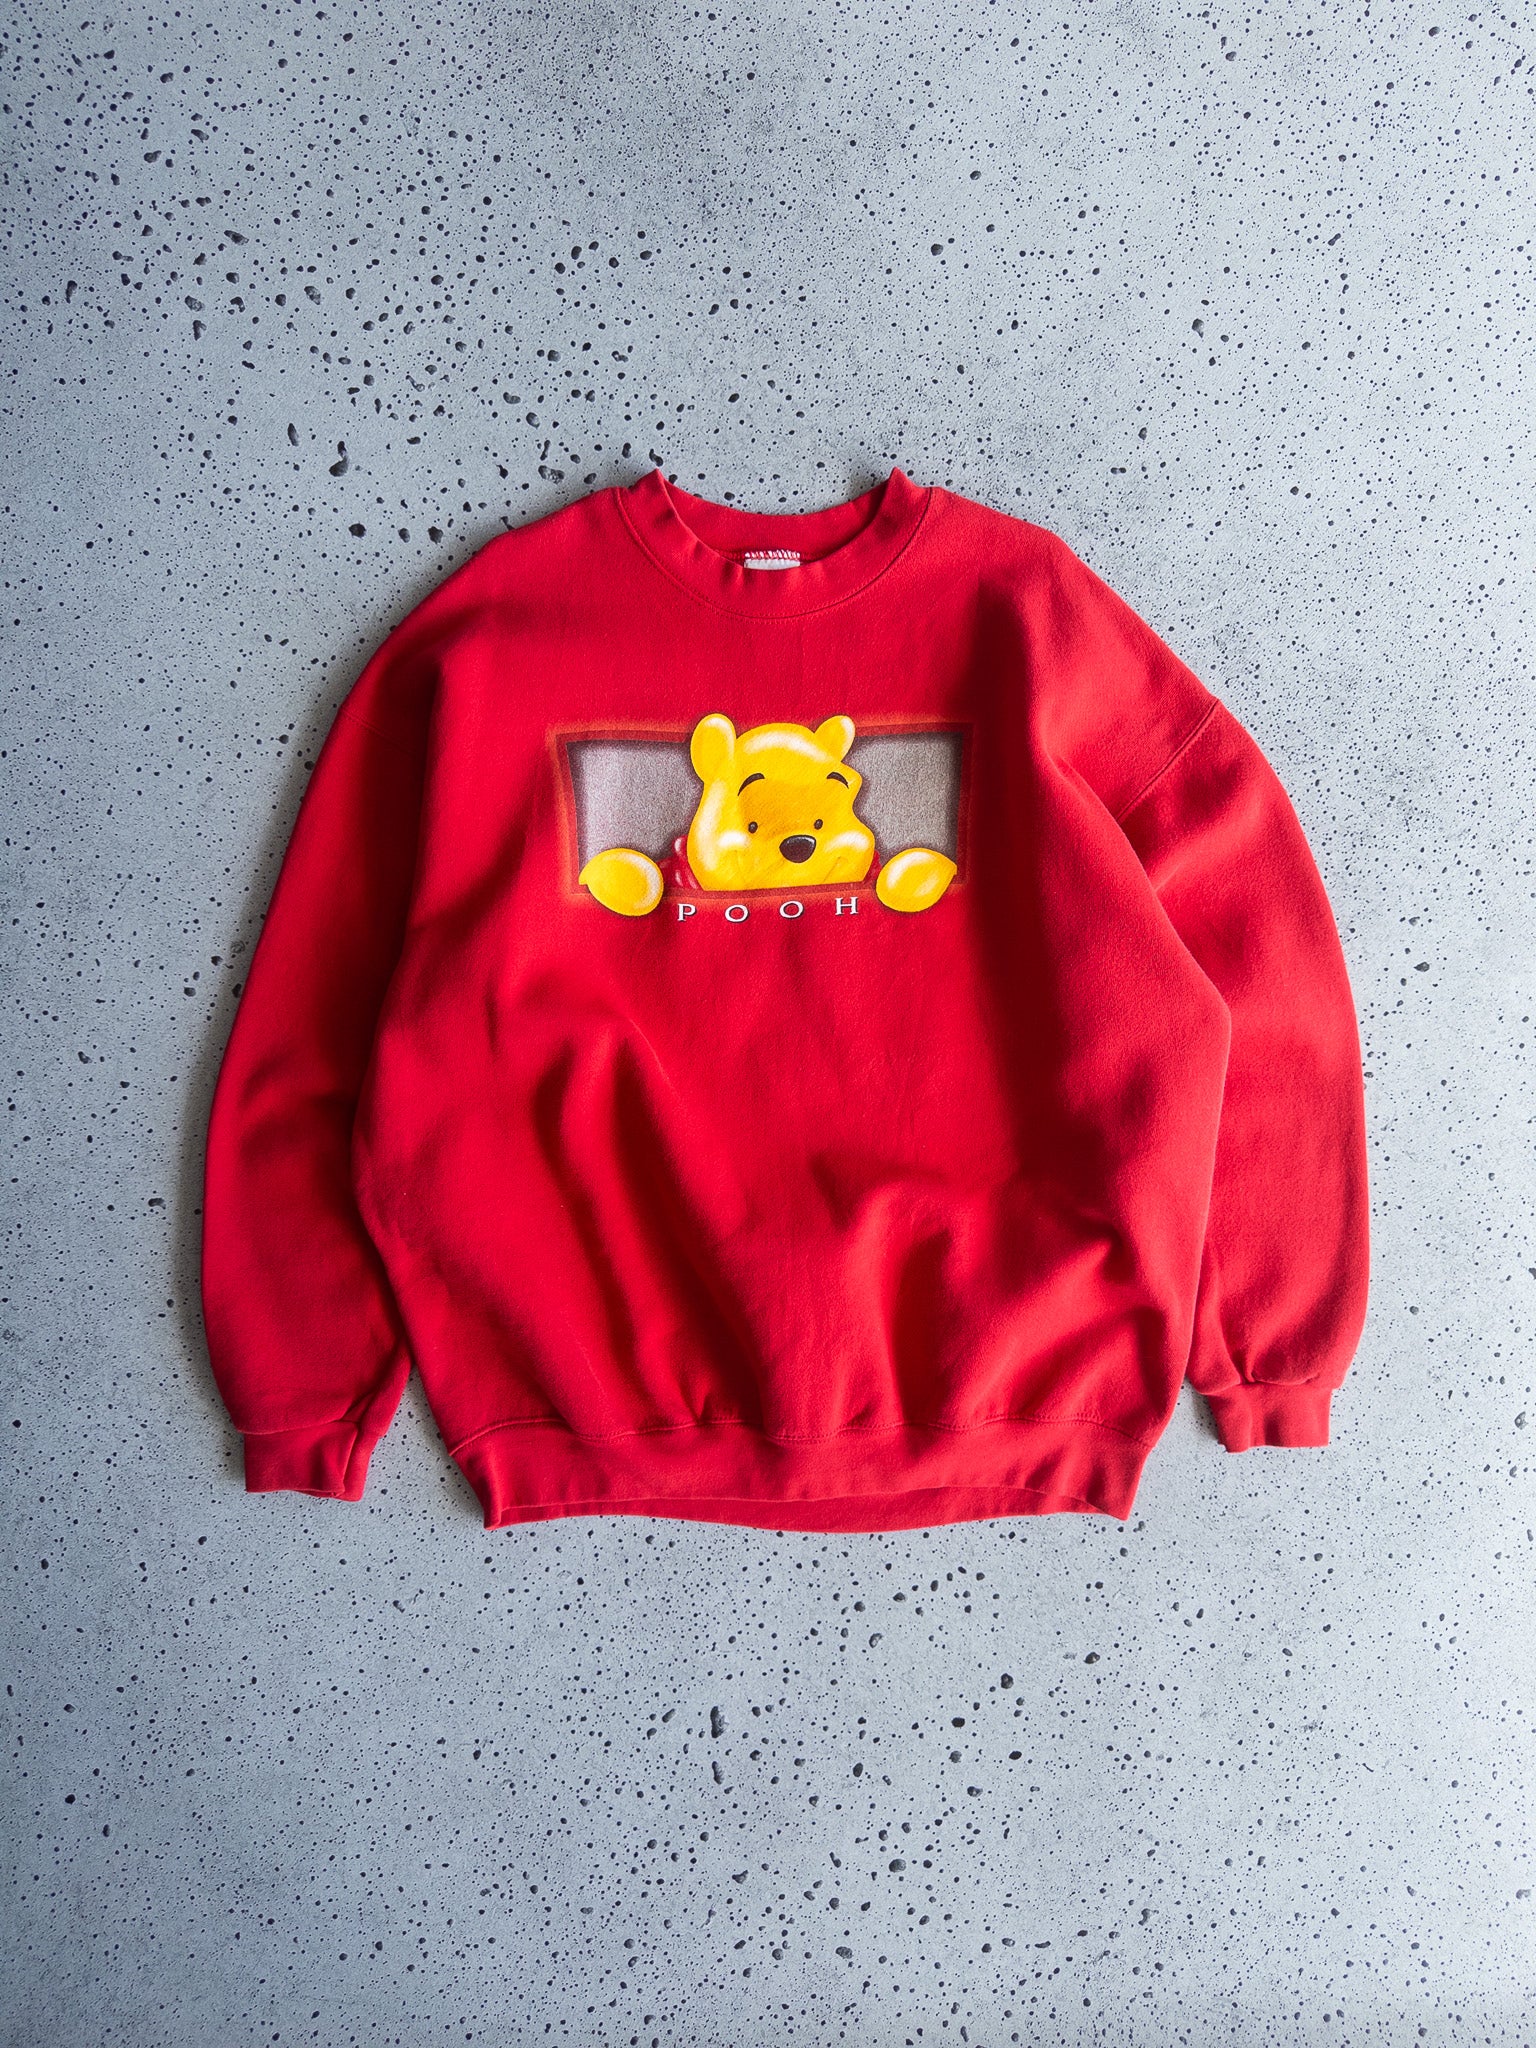 Vintage Winnie The Pooh Sweatshirt (XL)